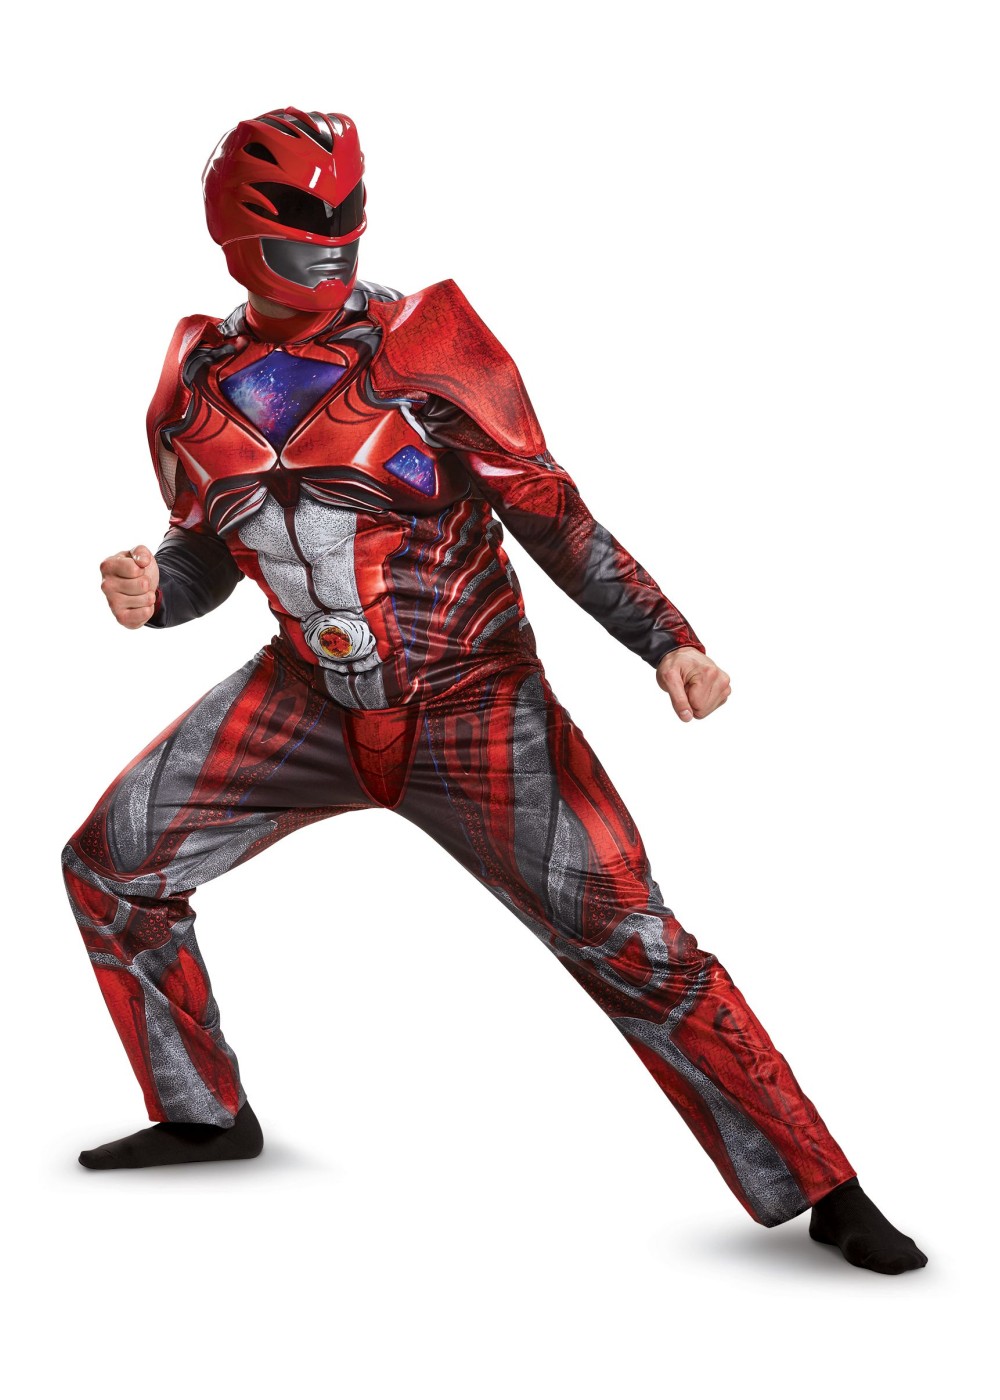 Red Power Ranger Muscle Men Movie Costume